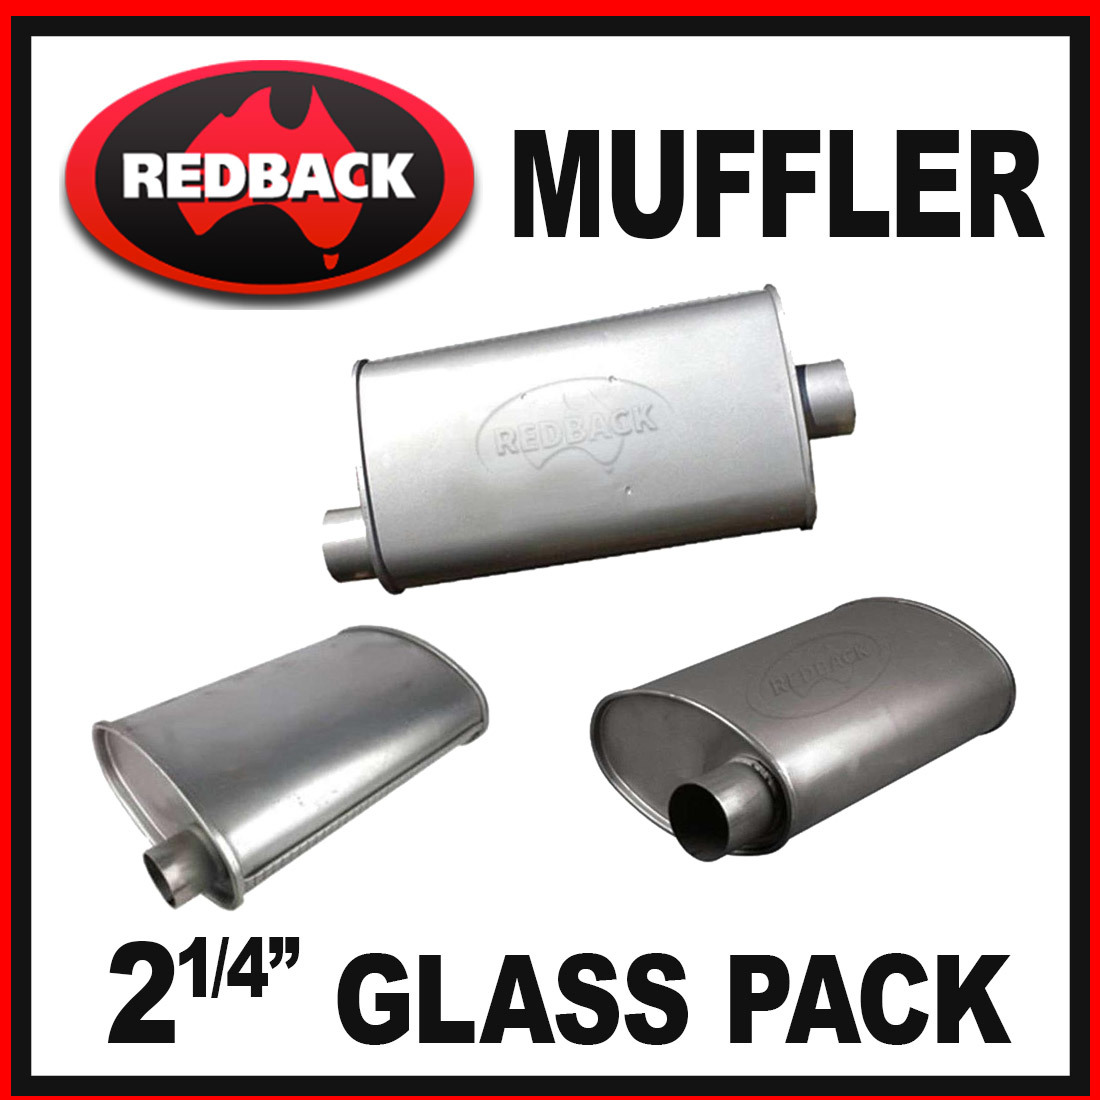 Redback 2 1/4" Glass Pack Muffler image